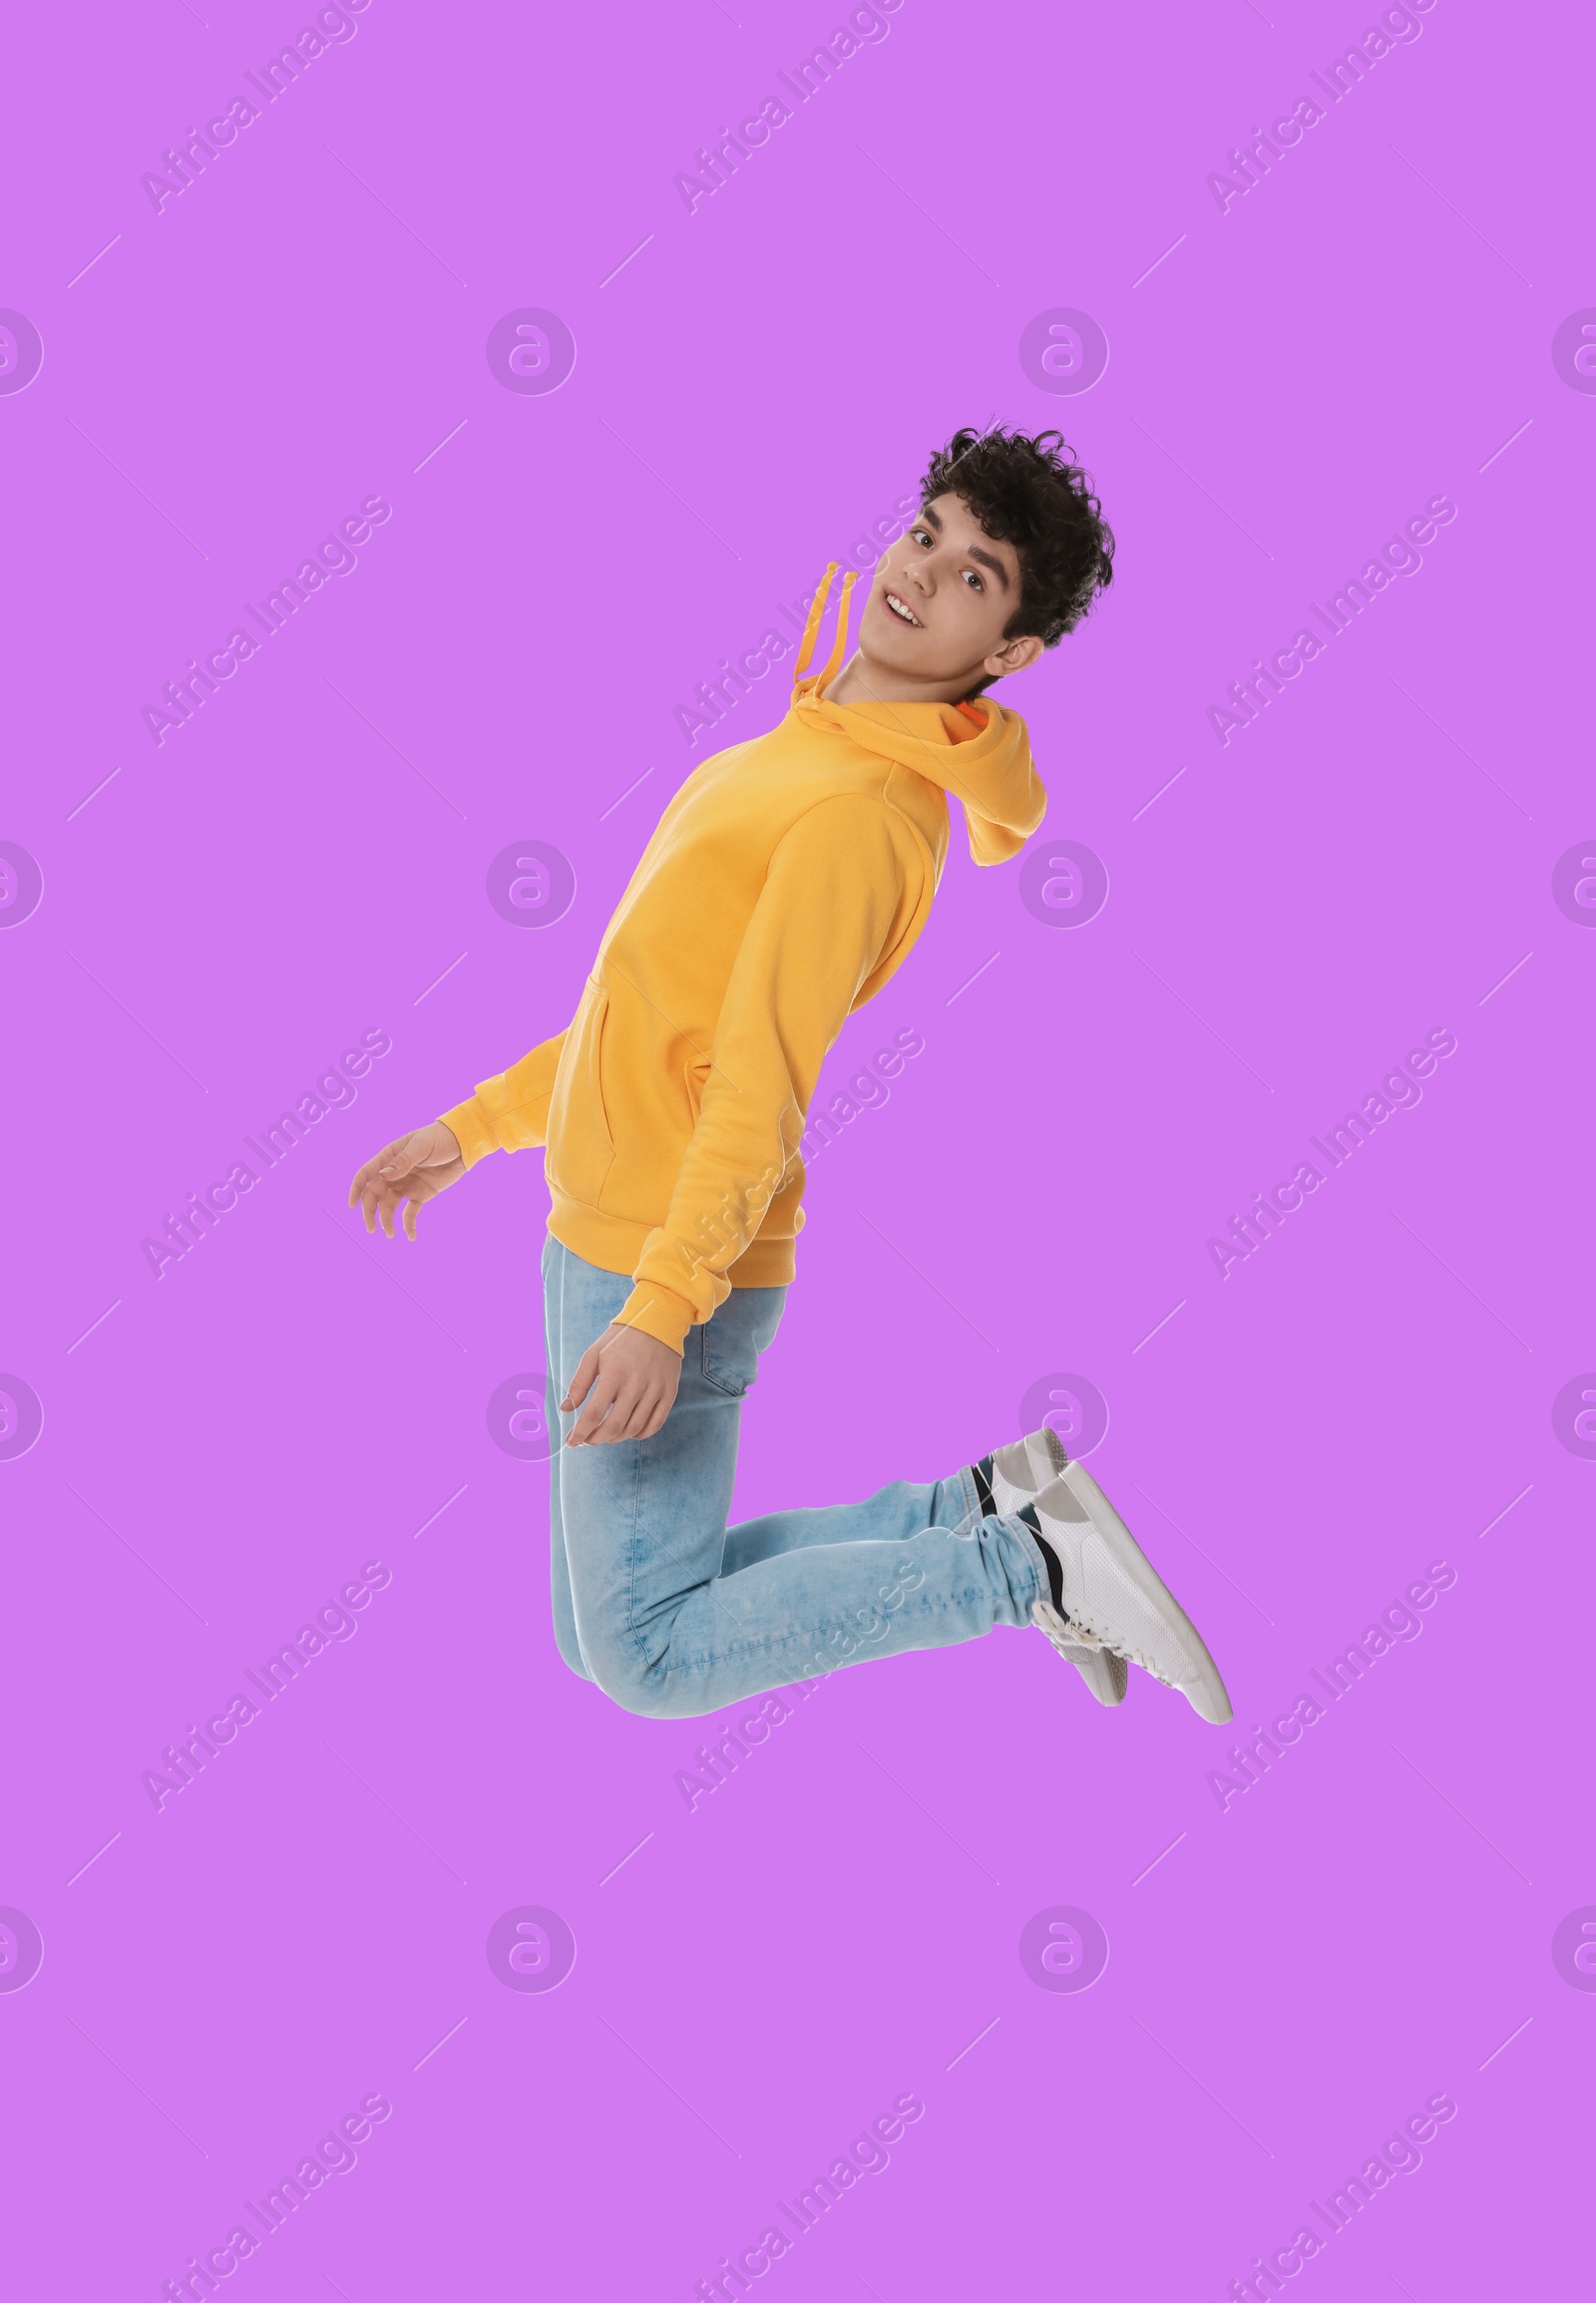 Image of Teenage boy jumping on violet background, full length portrait